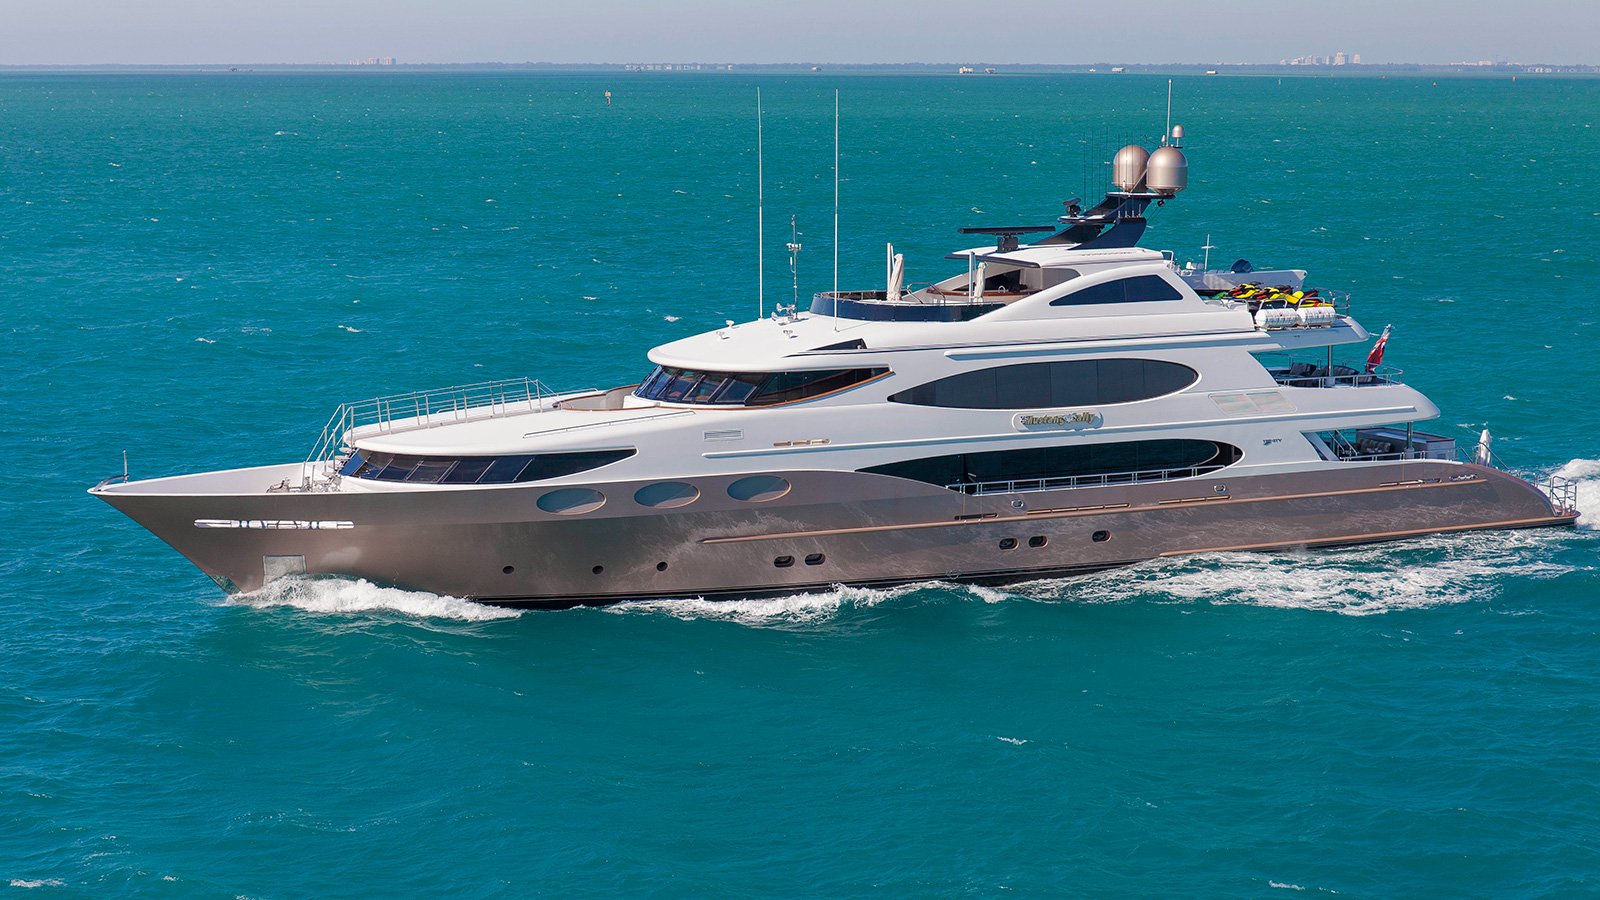 BAD ROMANCE Yacht • Trinity • 2008 • Owner US Millionaire